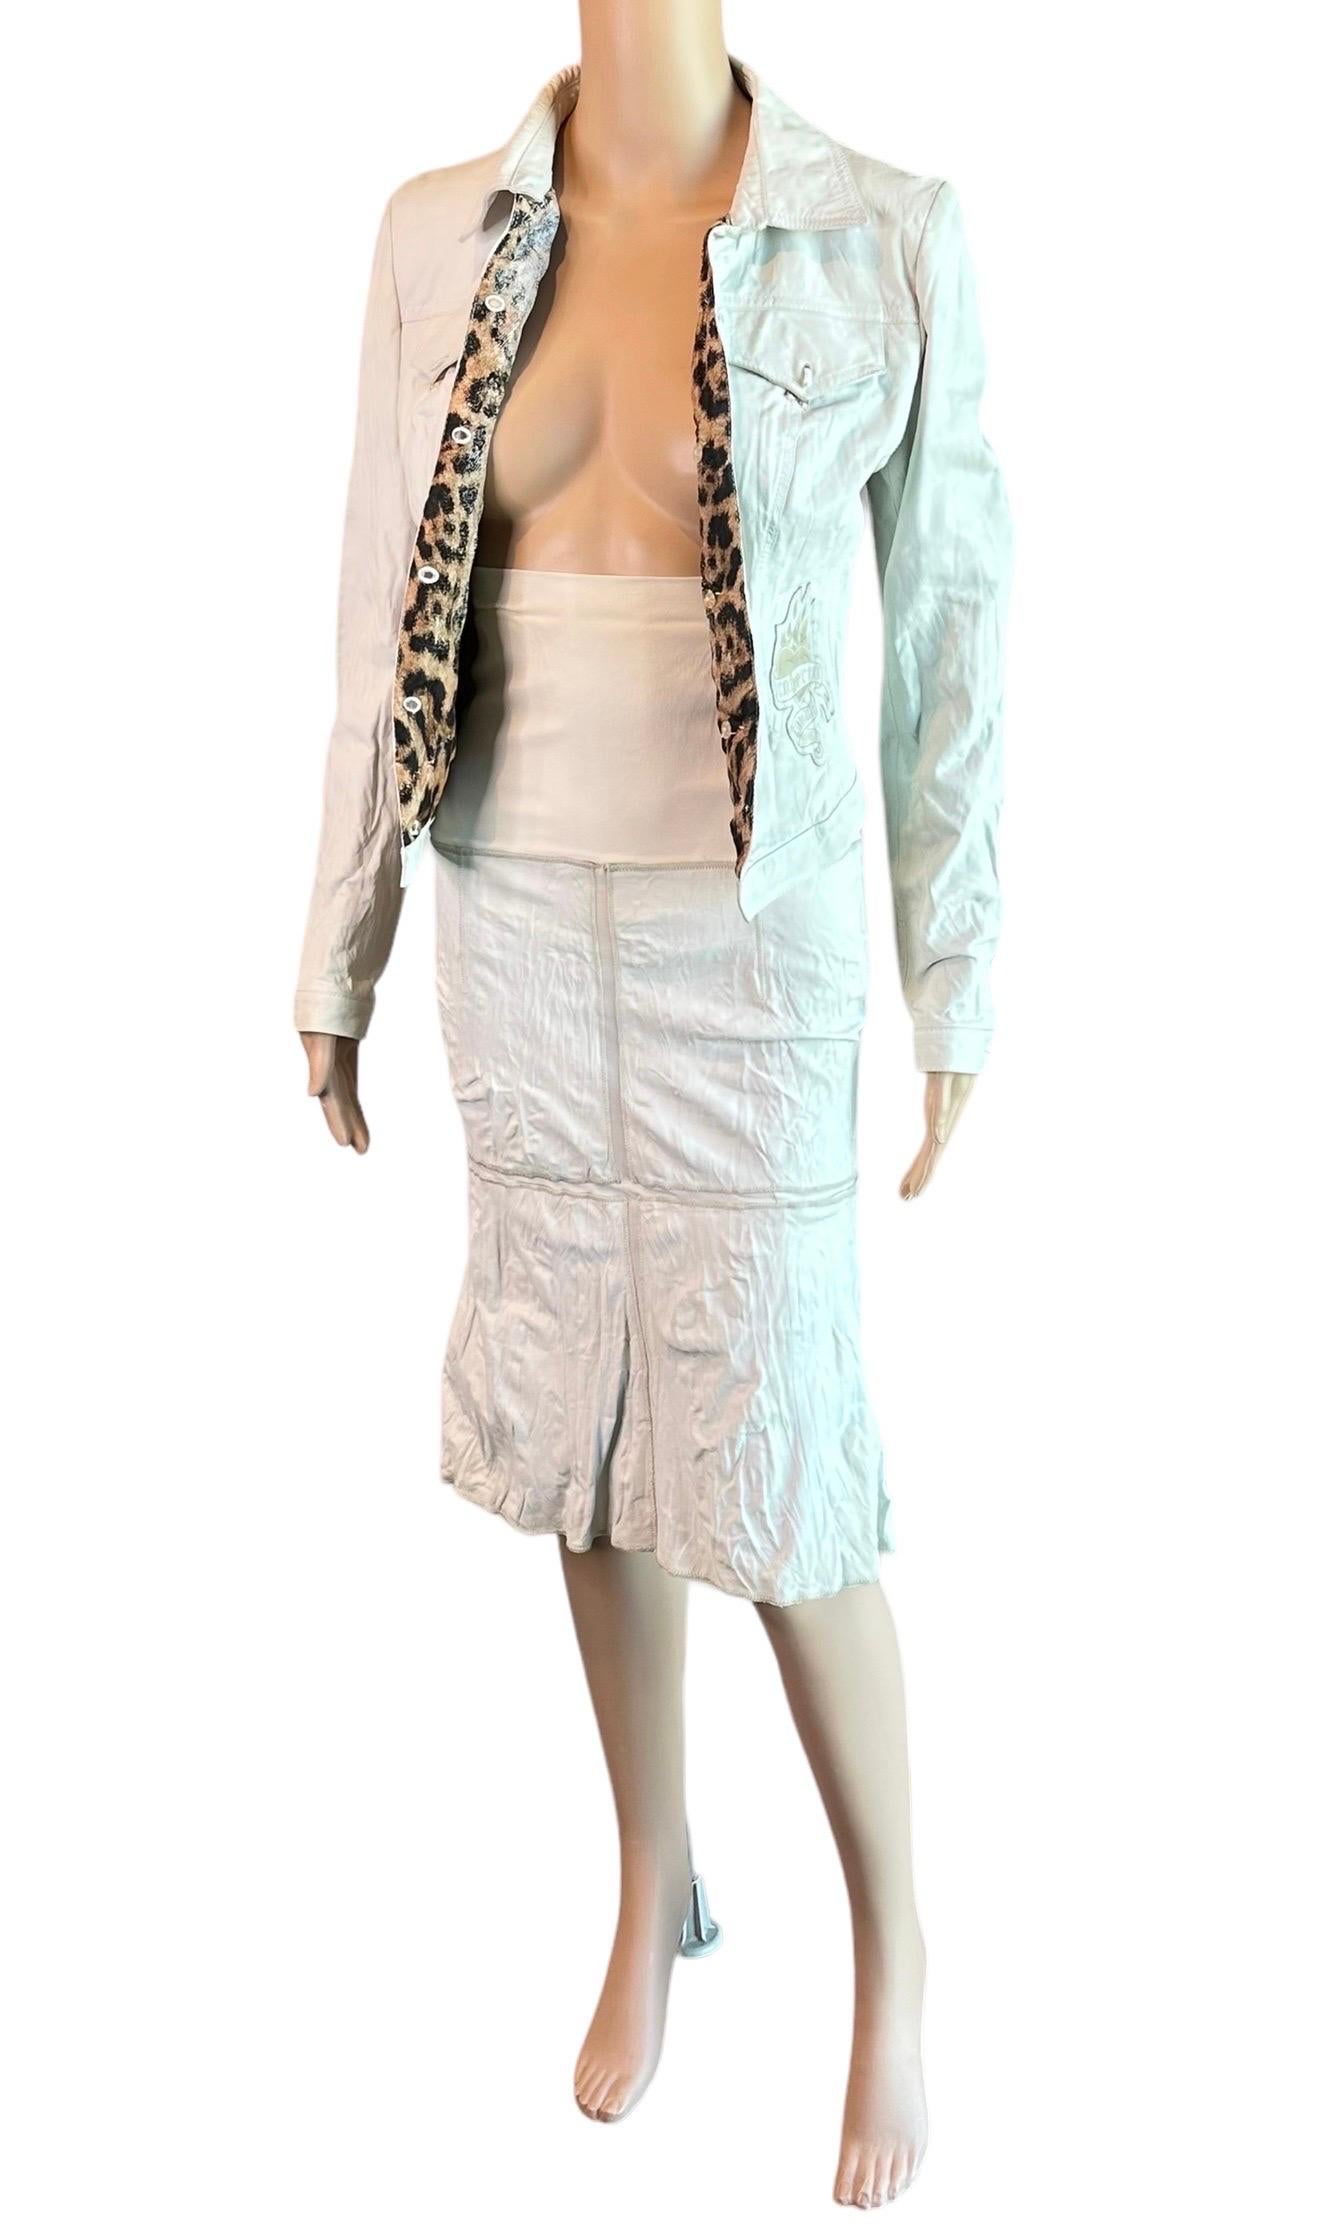 Roberto Cavalli S/S 2003 Unworn Leather Jacket Coat & Skirt 2 Piece Set Ensemble For Sale 3